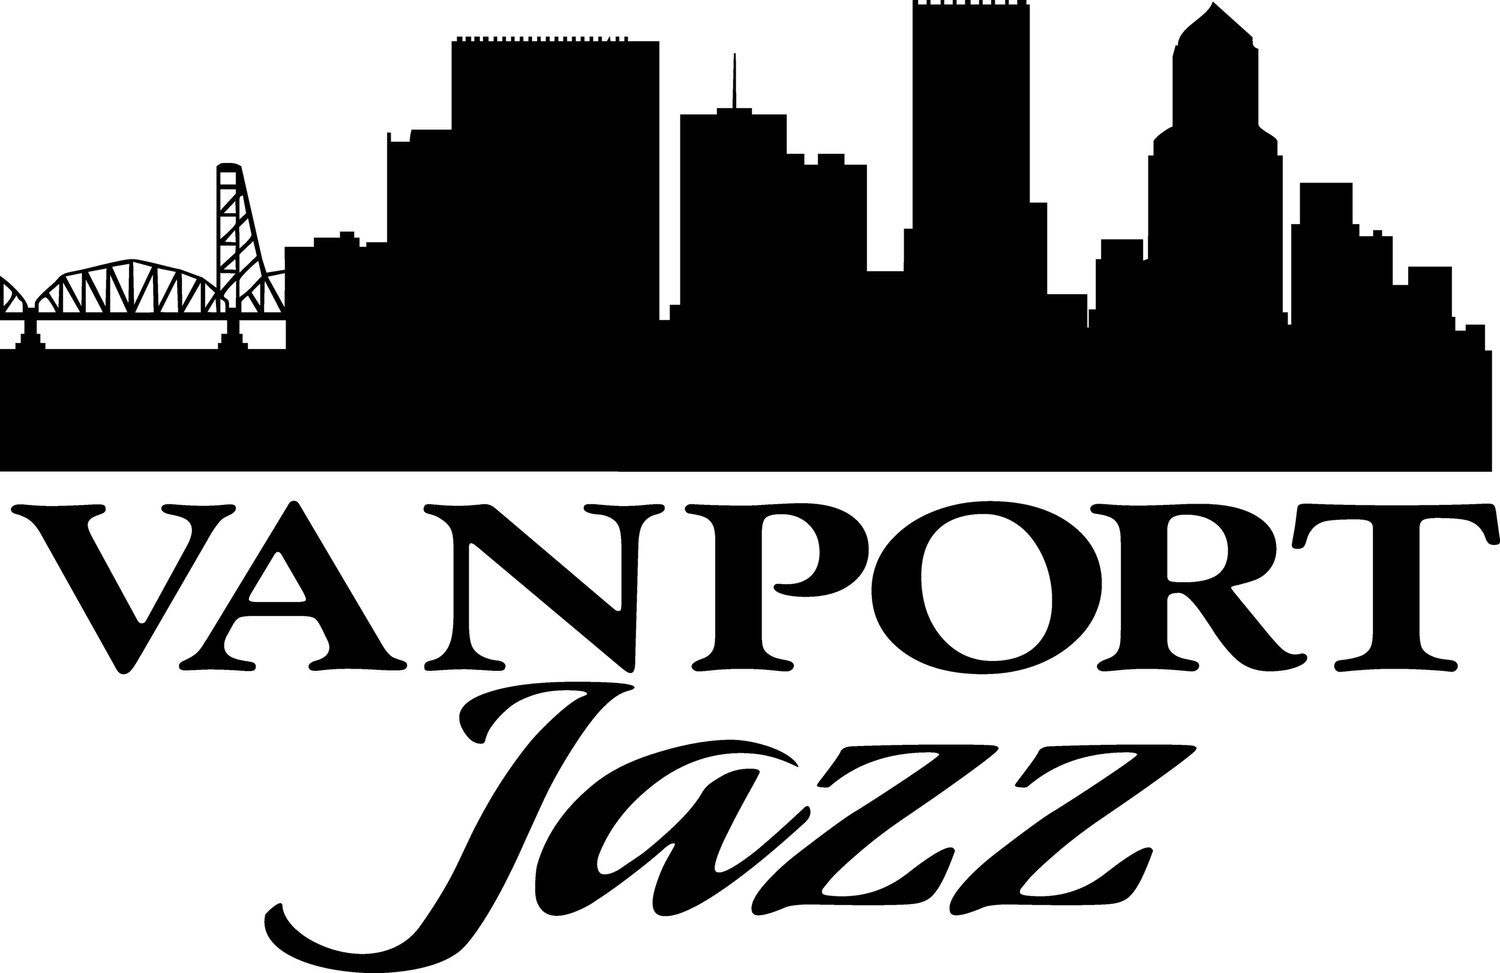 VanPort Jazz Band